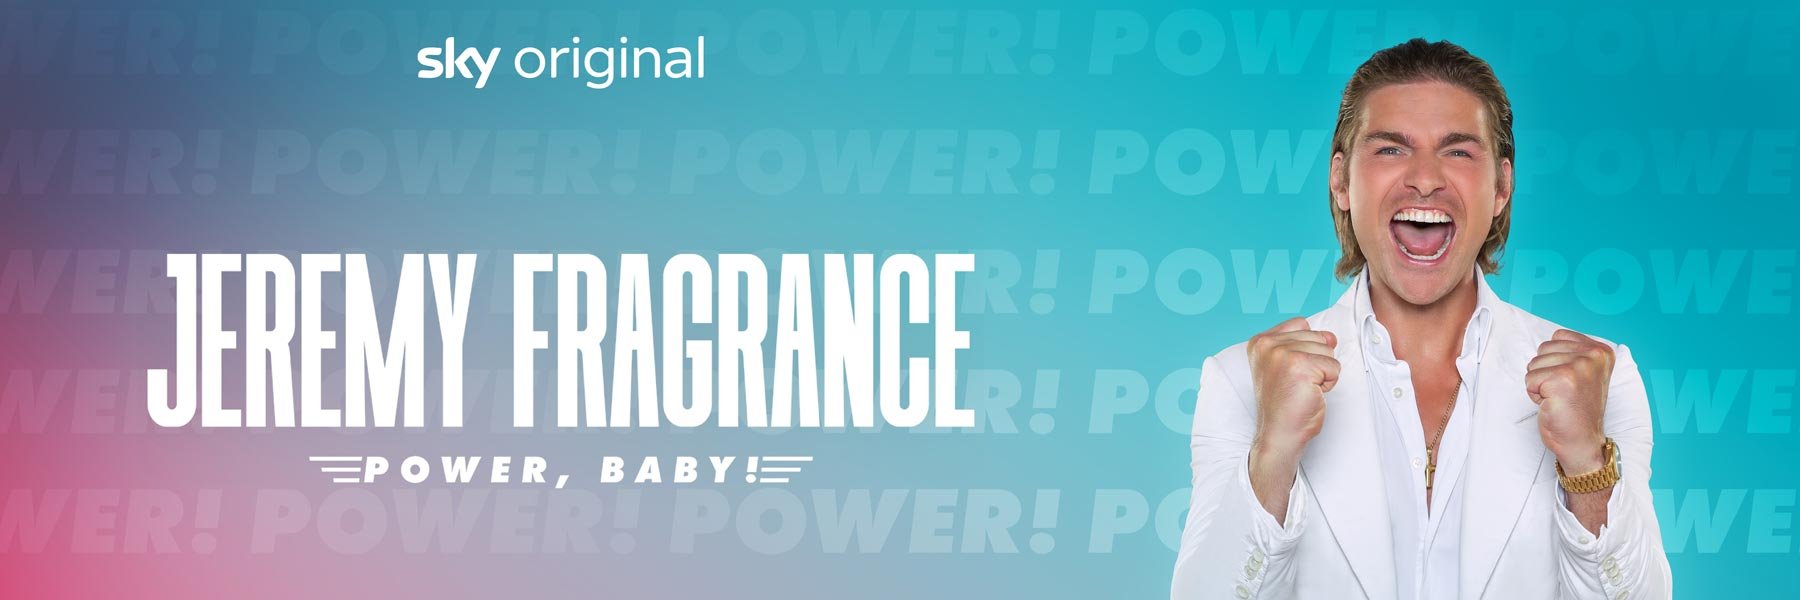 Jeremy Fragrance - Power Baby! | Sky X